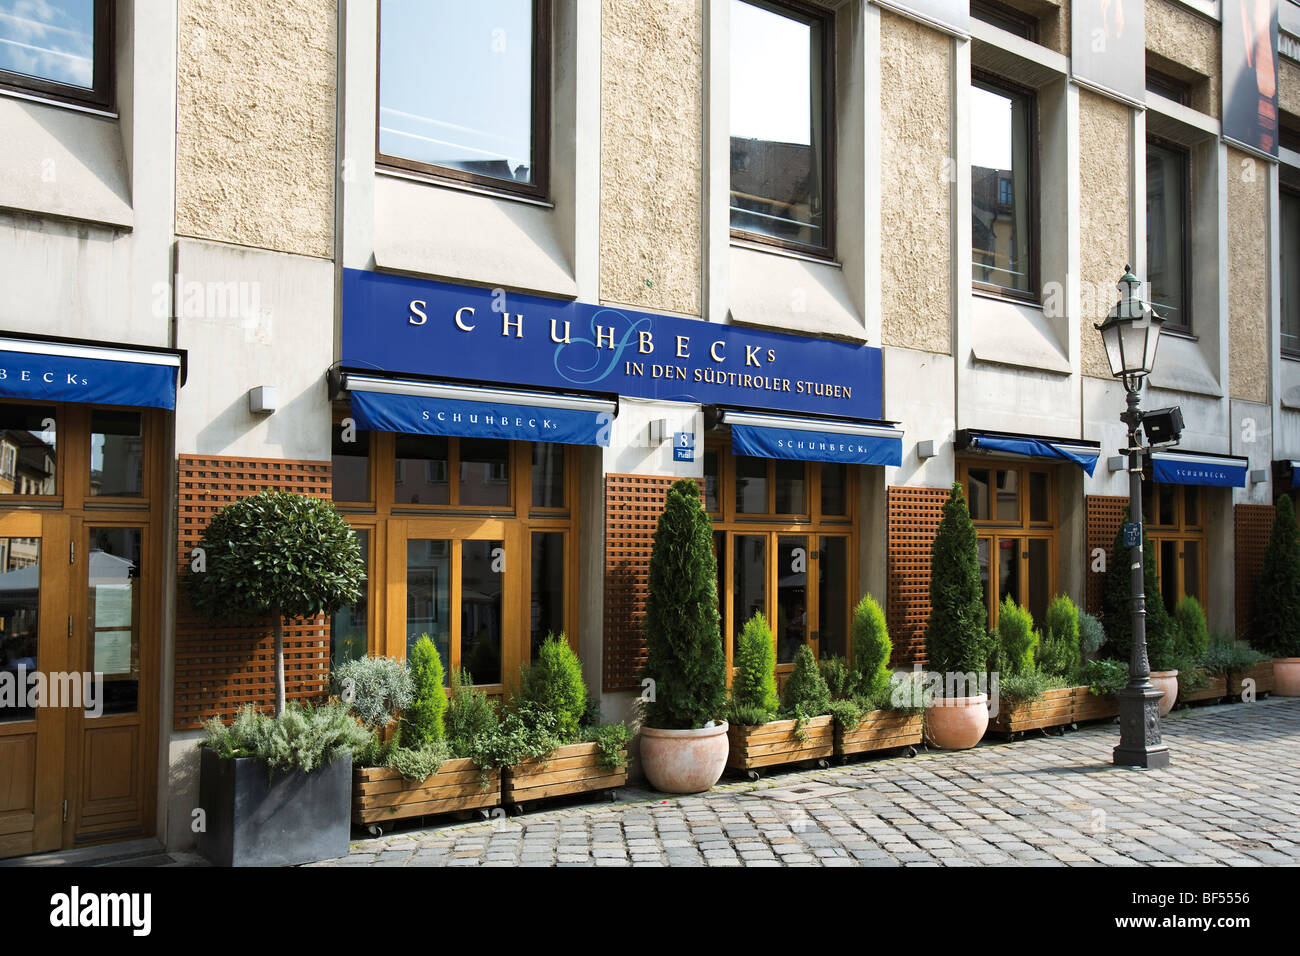 Restaurant Schuhbeck, Munich, Bavaria, Germany, Europe Stock Photo